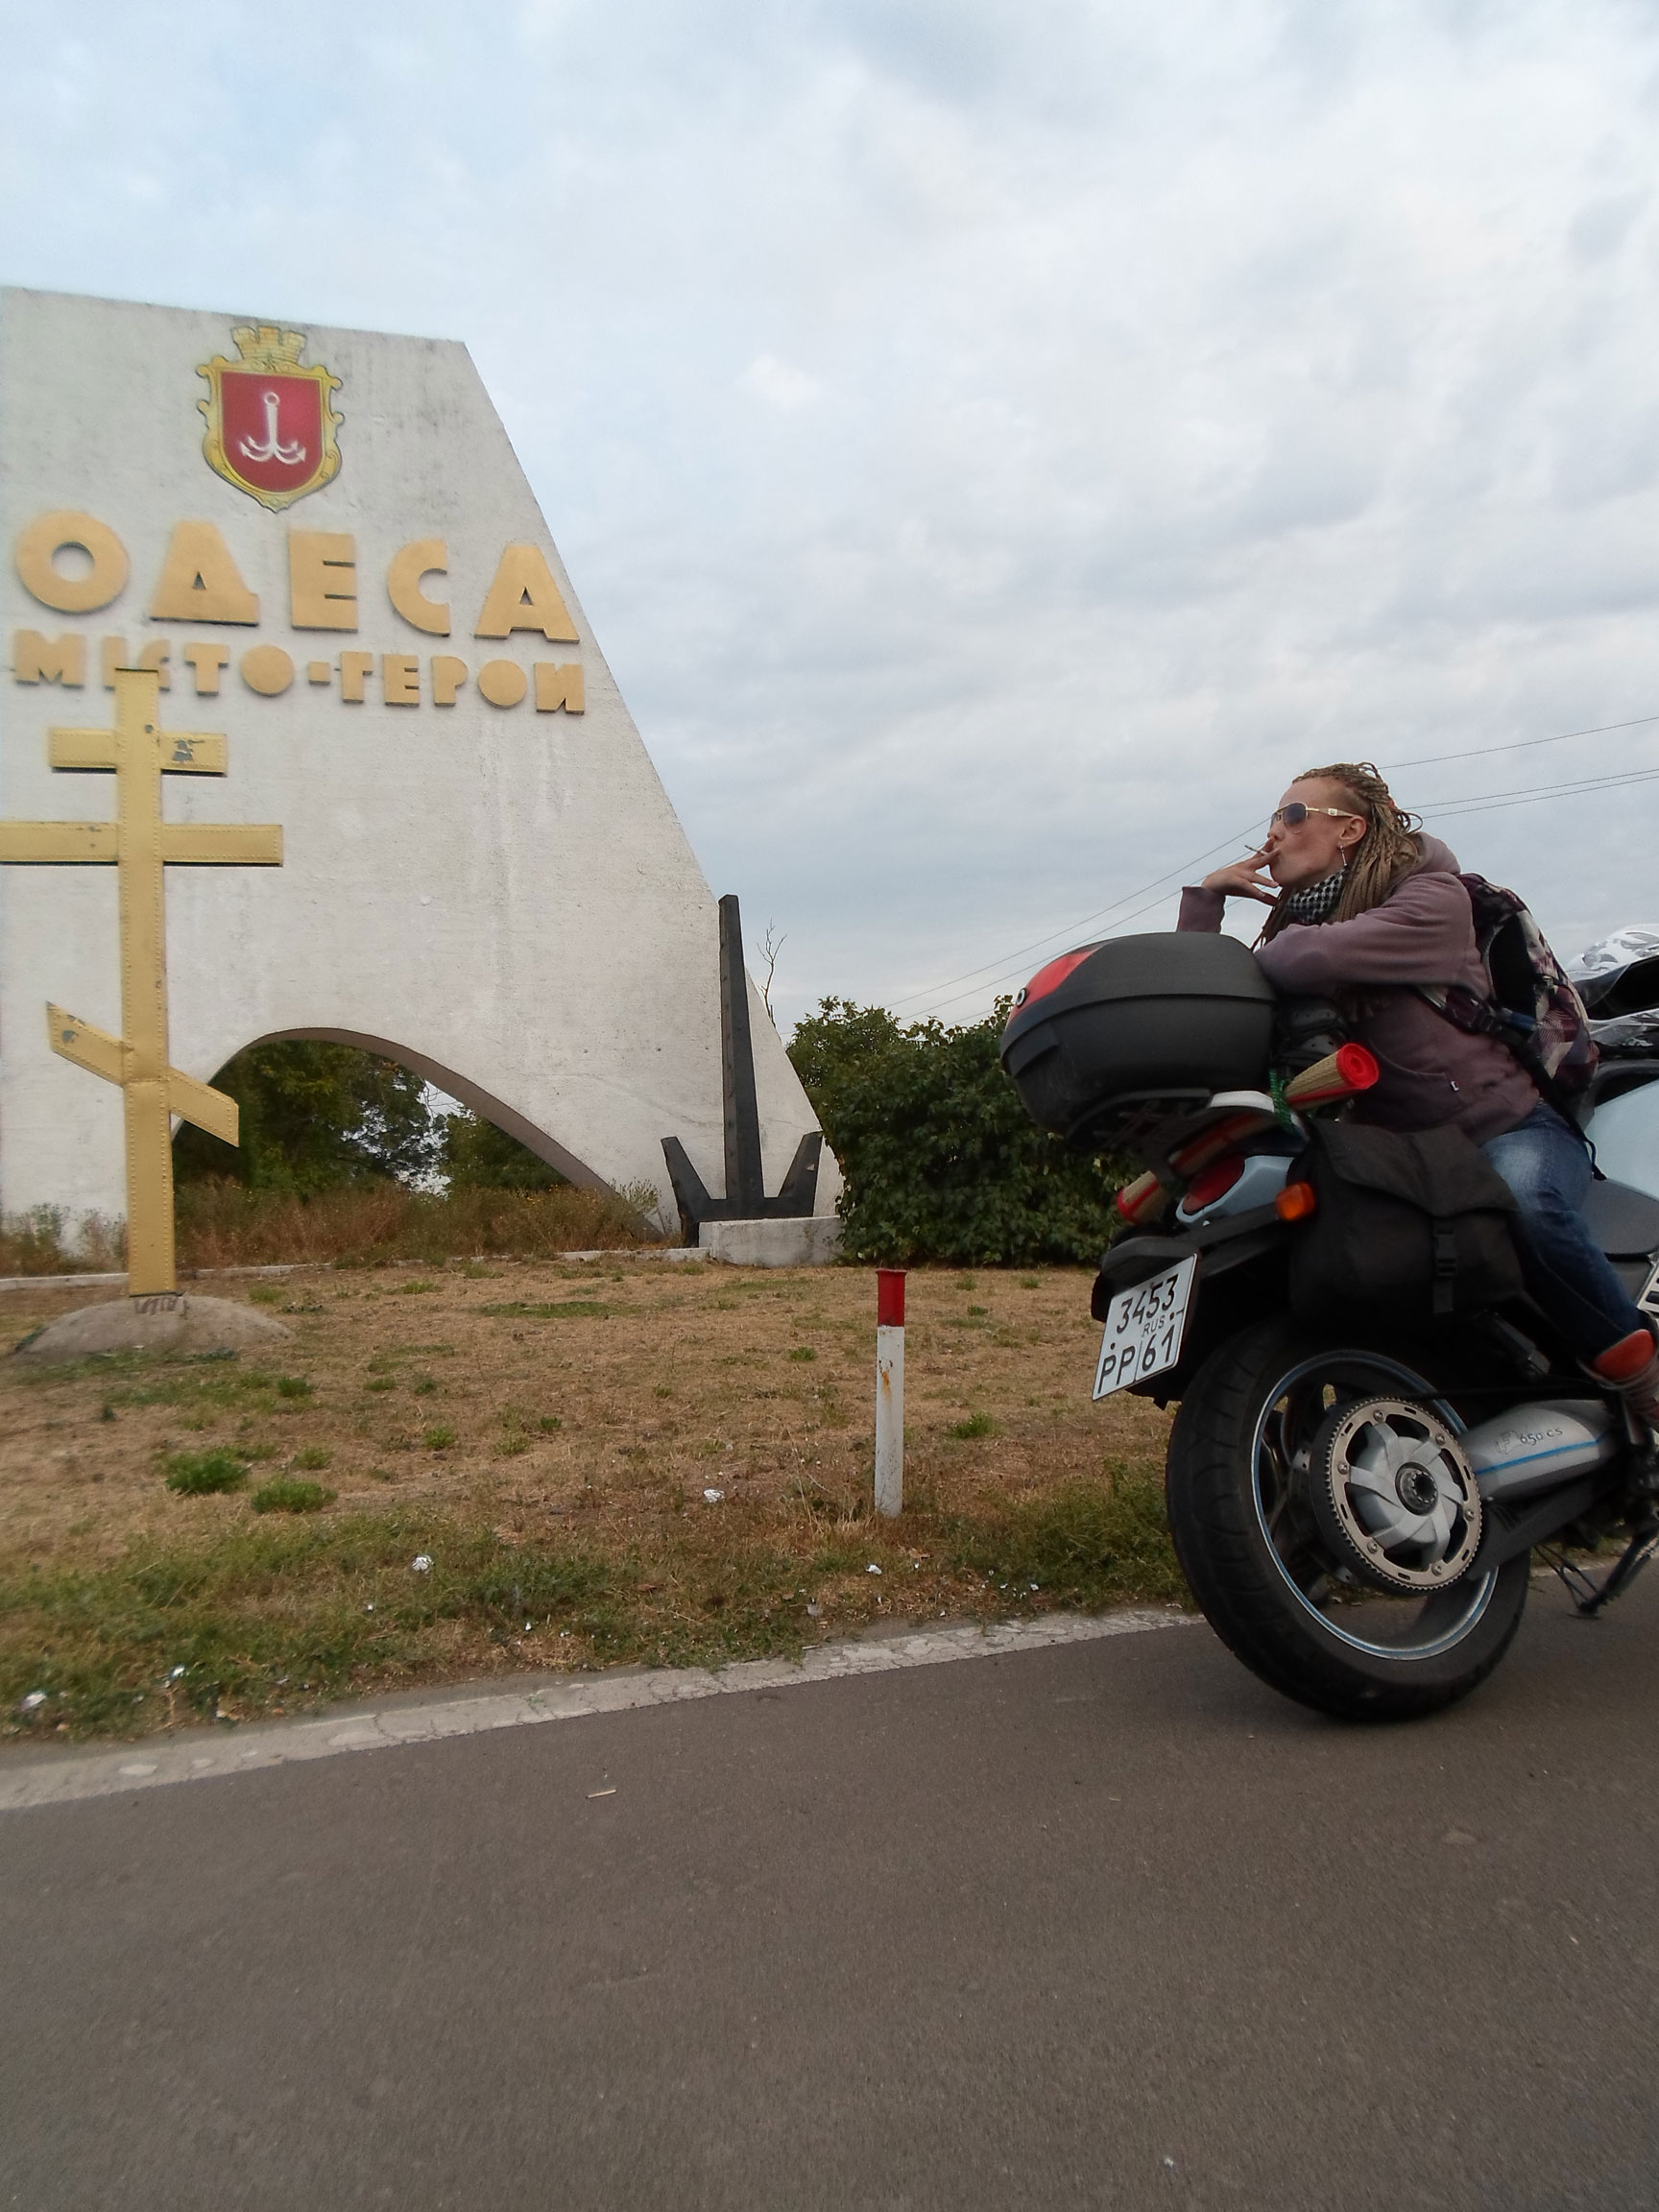 Women Who Ride: Victoria Dorozhko stopped on the road, smoking a cigarette